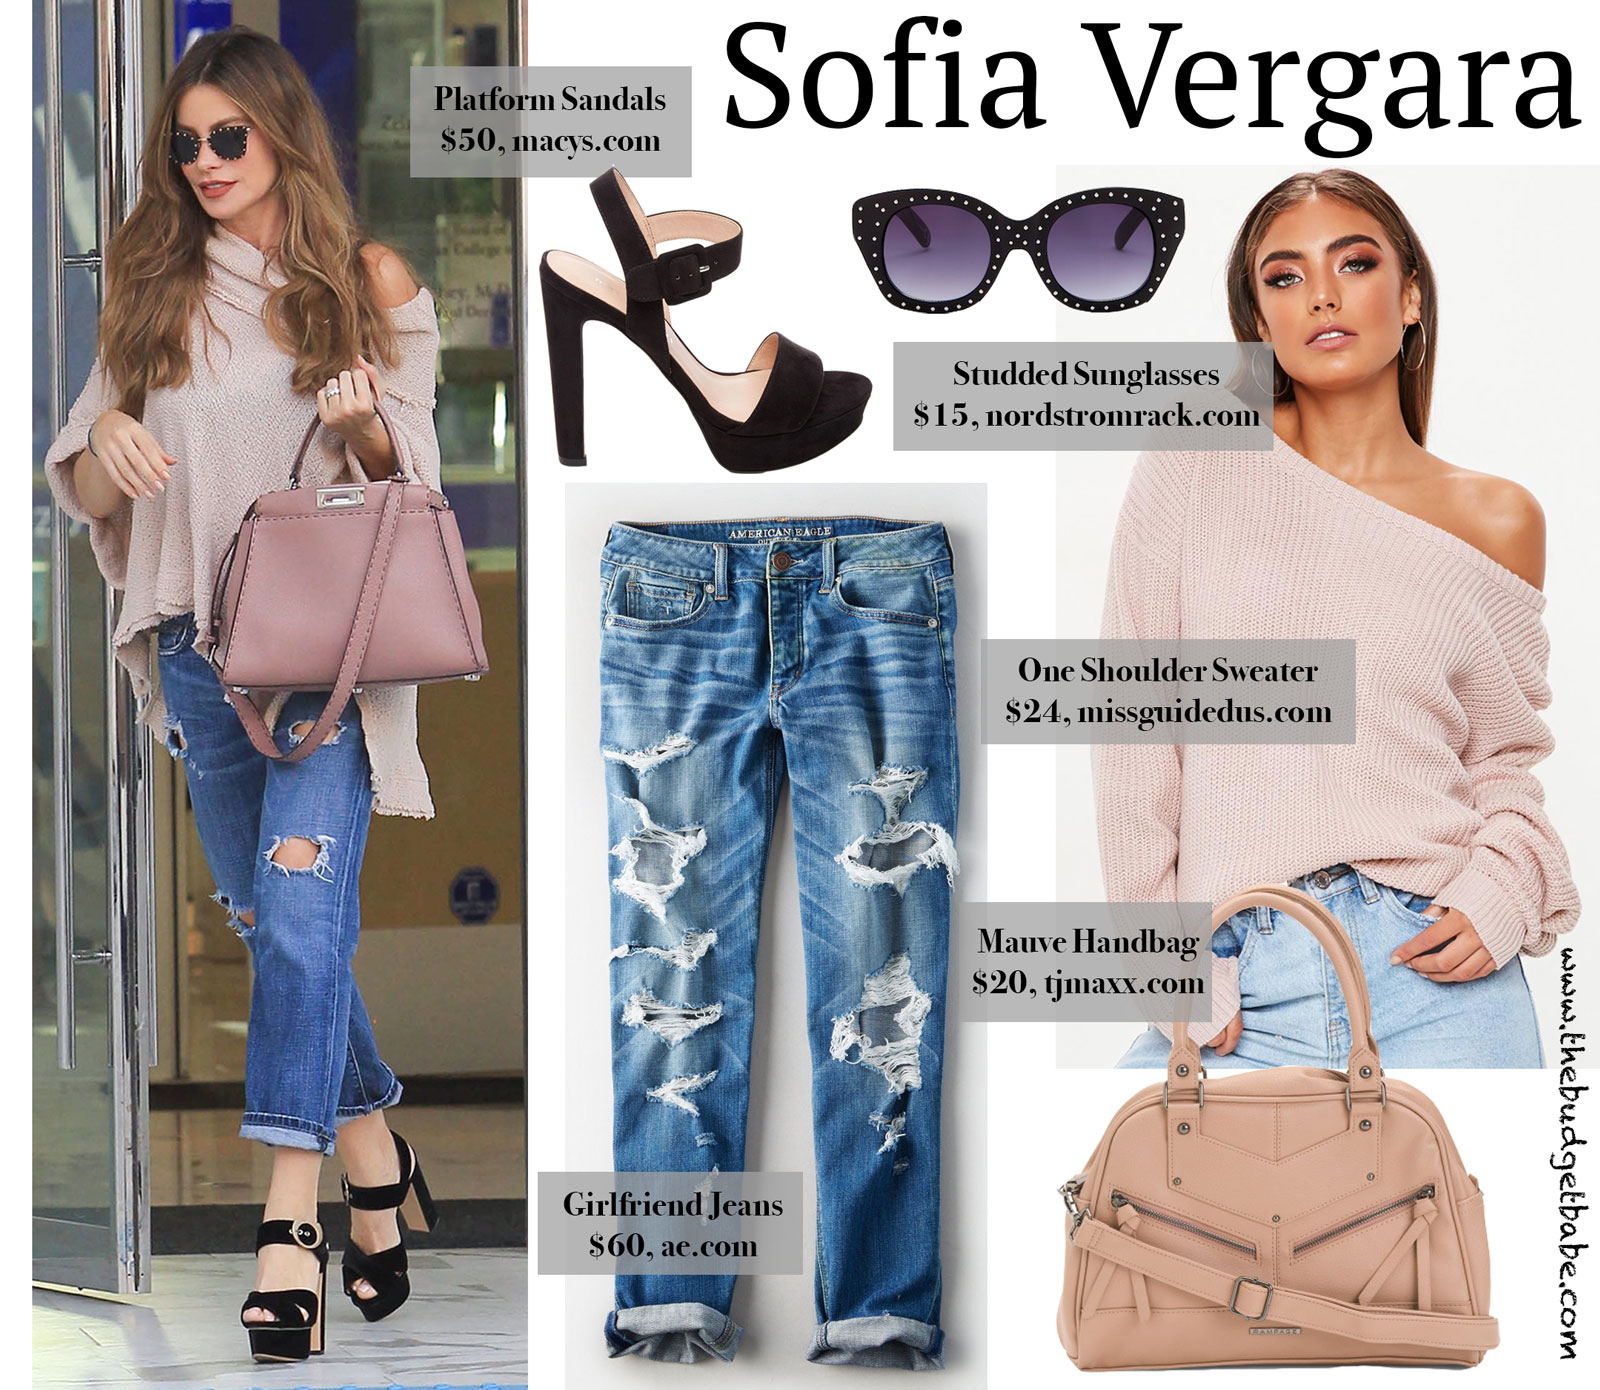 Sofia Vergara Pink Off the Shoulder Sweater and Fendi Bag